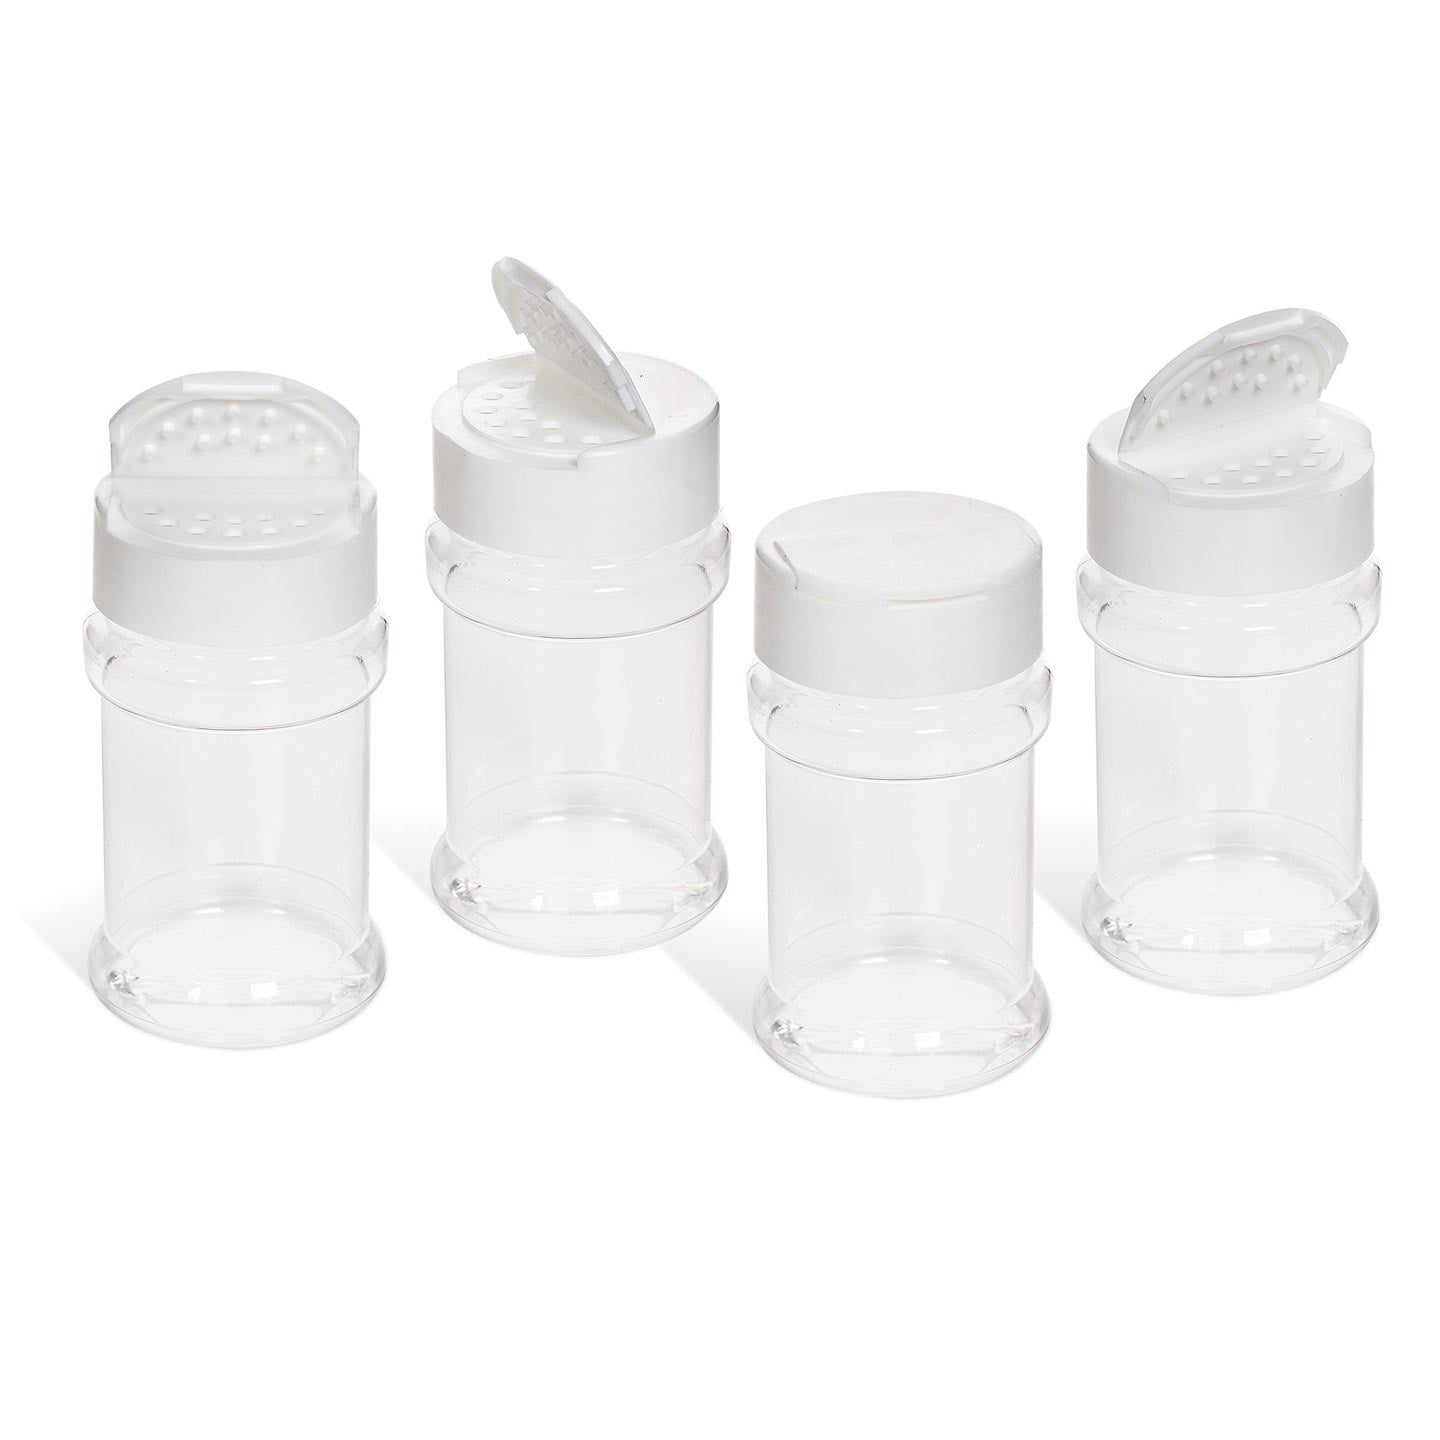 Plastic Shaker Jar with Lid: 1.5 ounces, 4 pack - Walmart.com